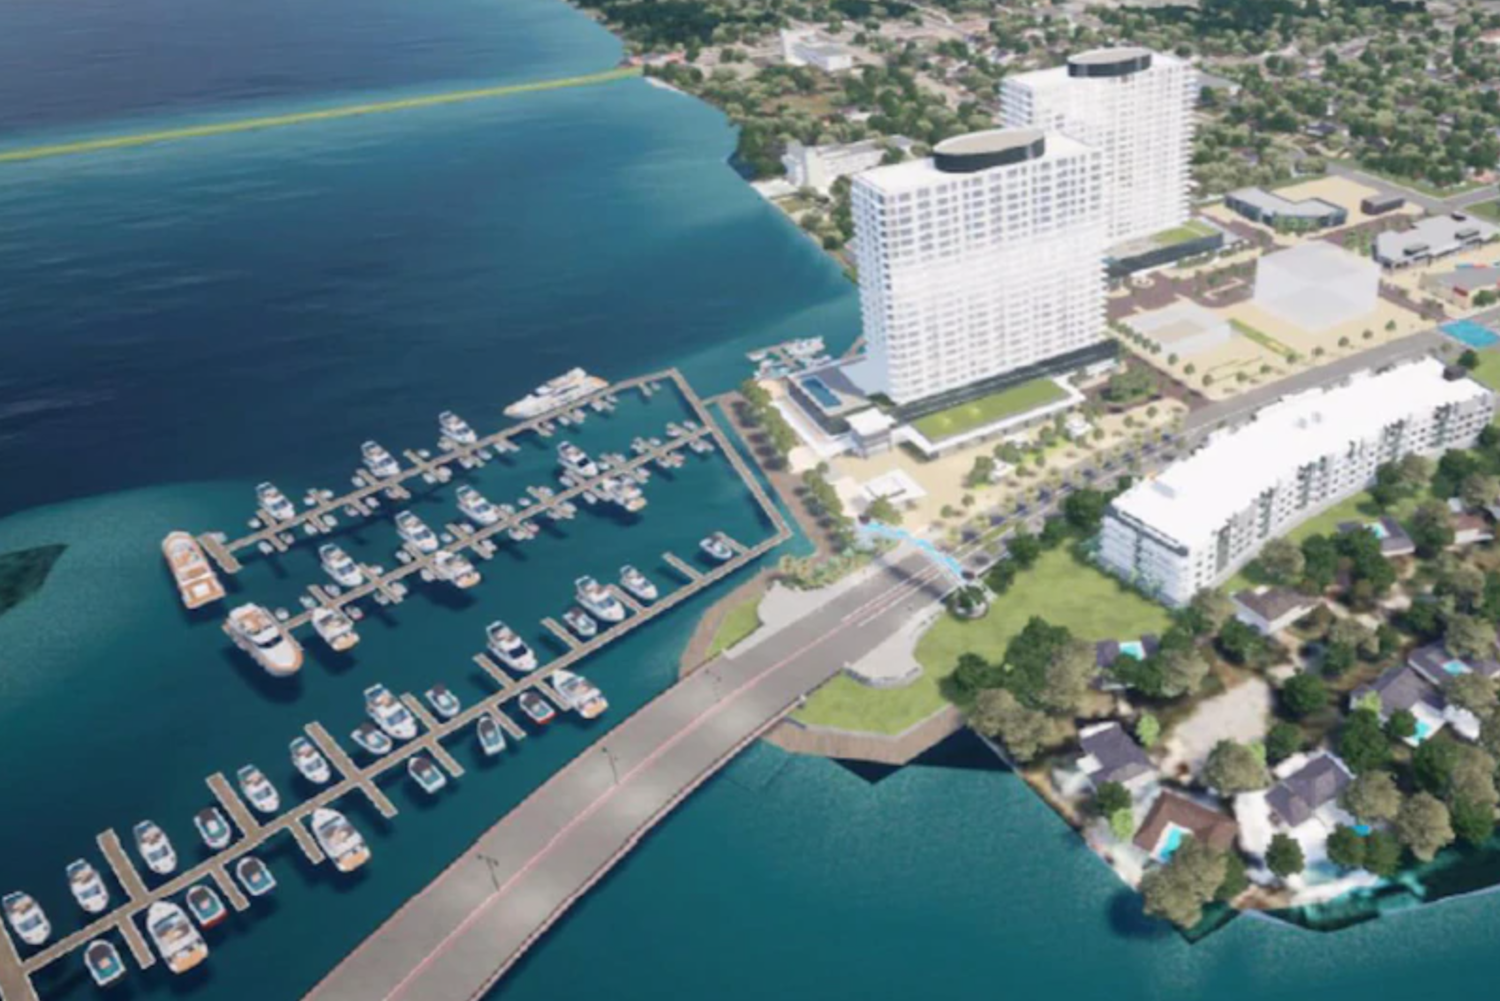 Grove Resort & Waterpark, Orlando Condo Hotel, Prices Start in high  $300,000s